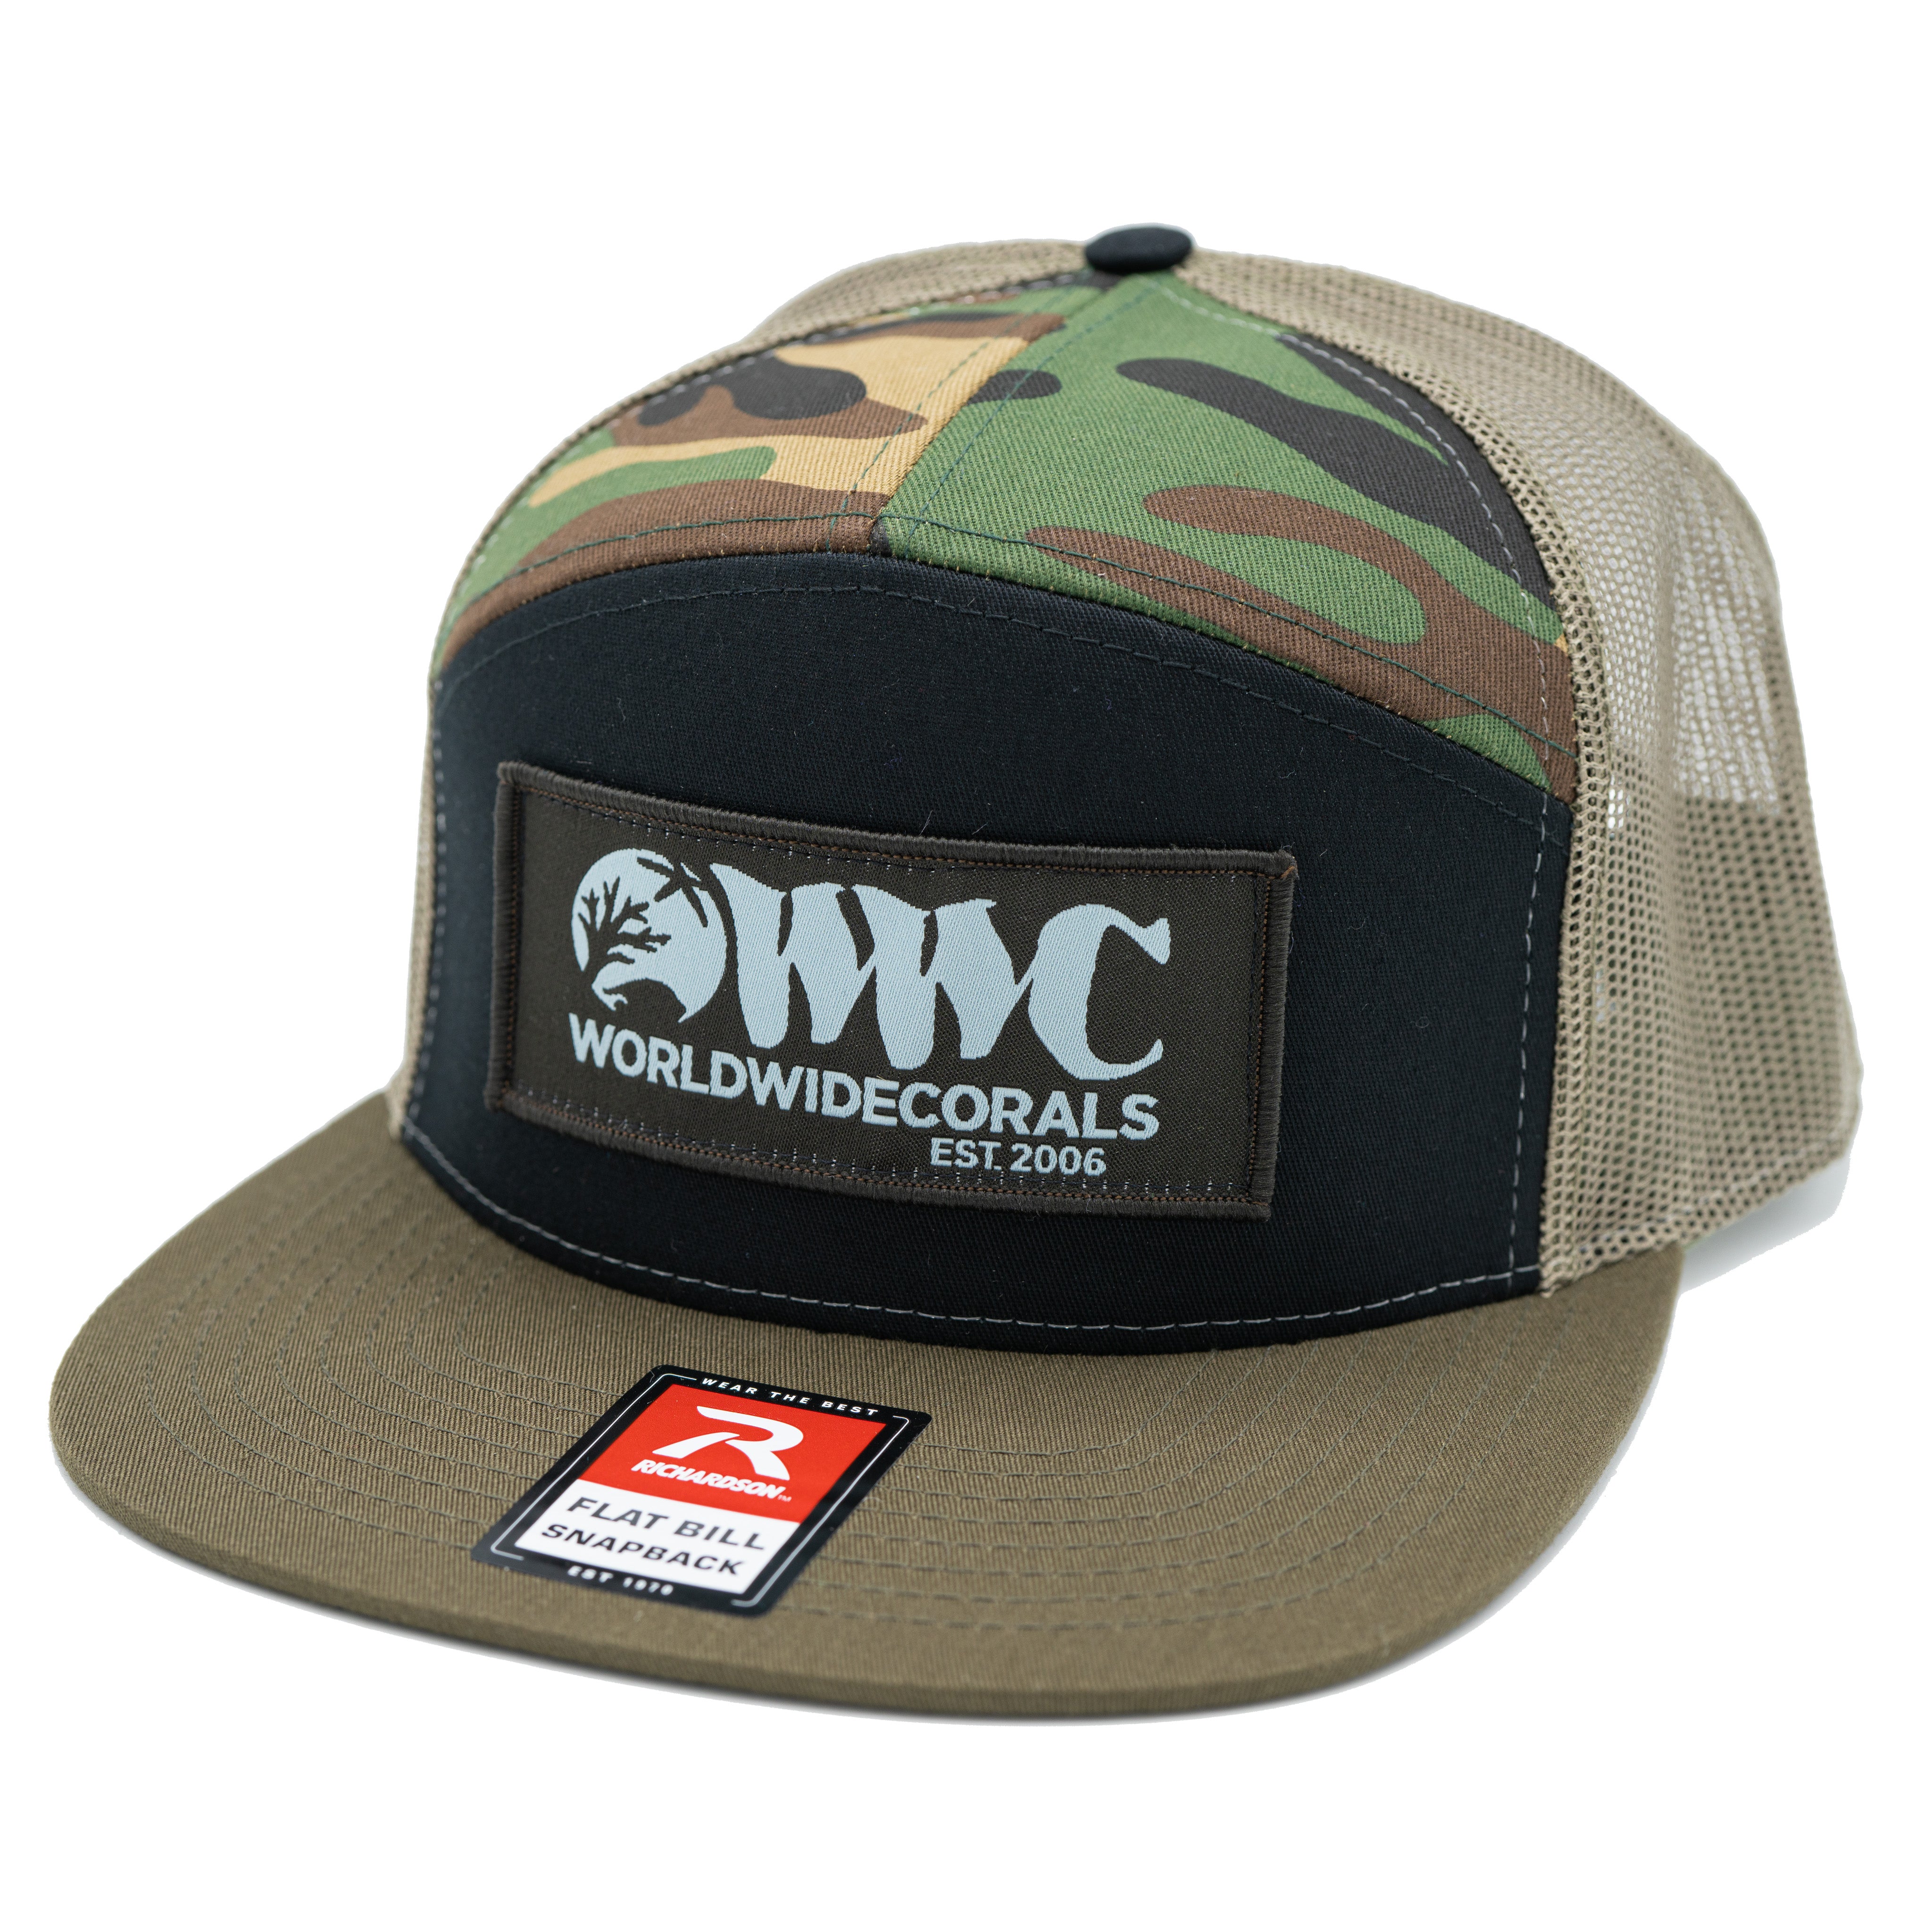 WWC 7 Panel Trucker Hat Snapback